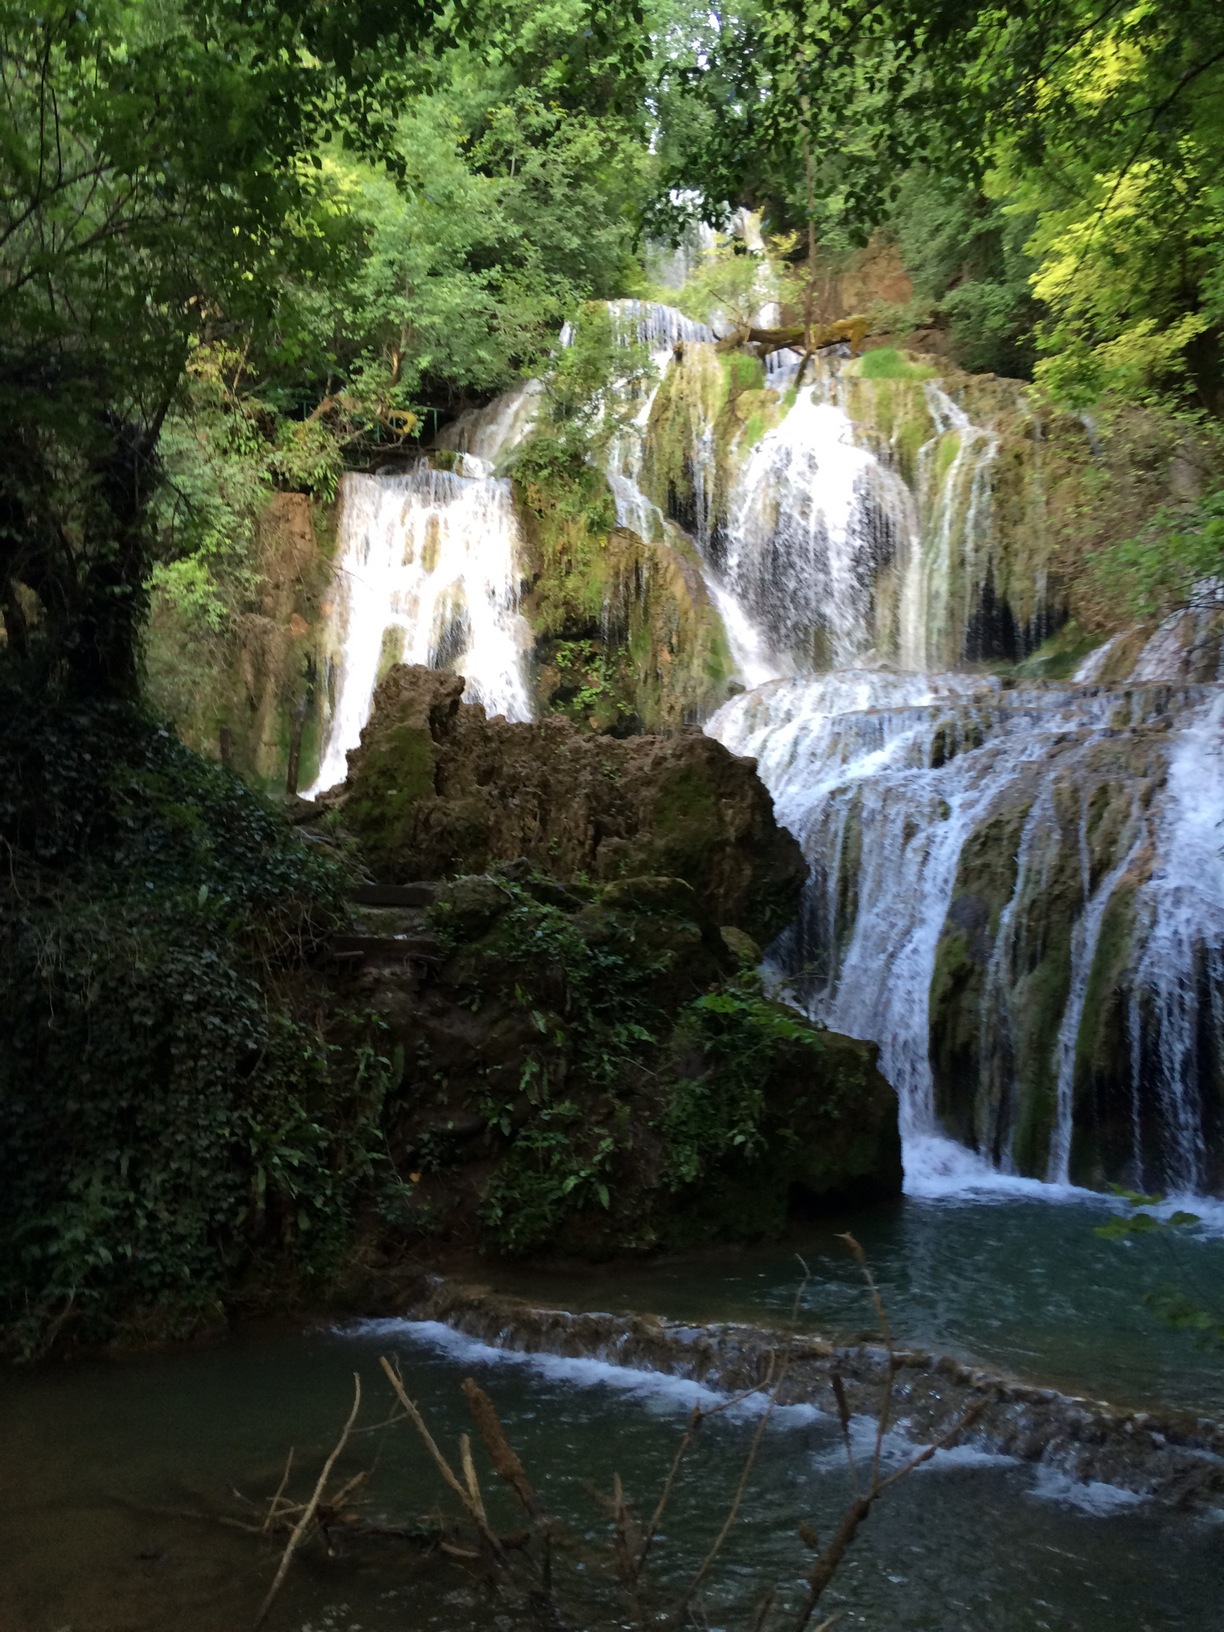 Krushuna waterfalls, Krushuna, Bulgaria - Beautiful park plus...